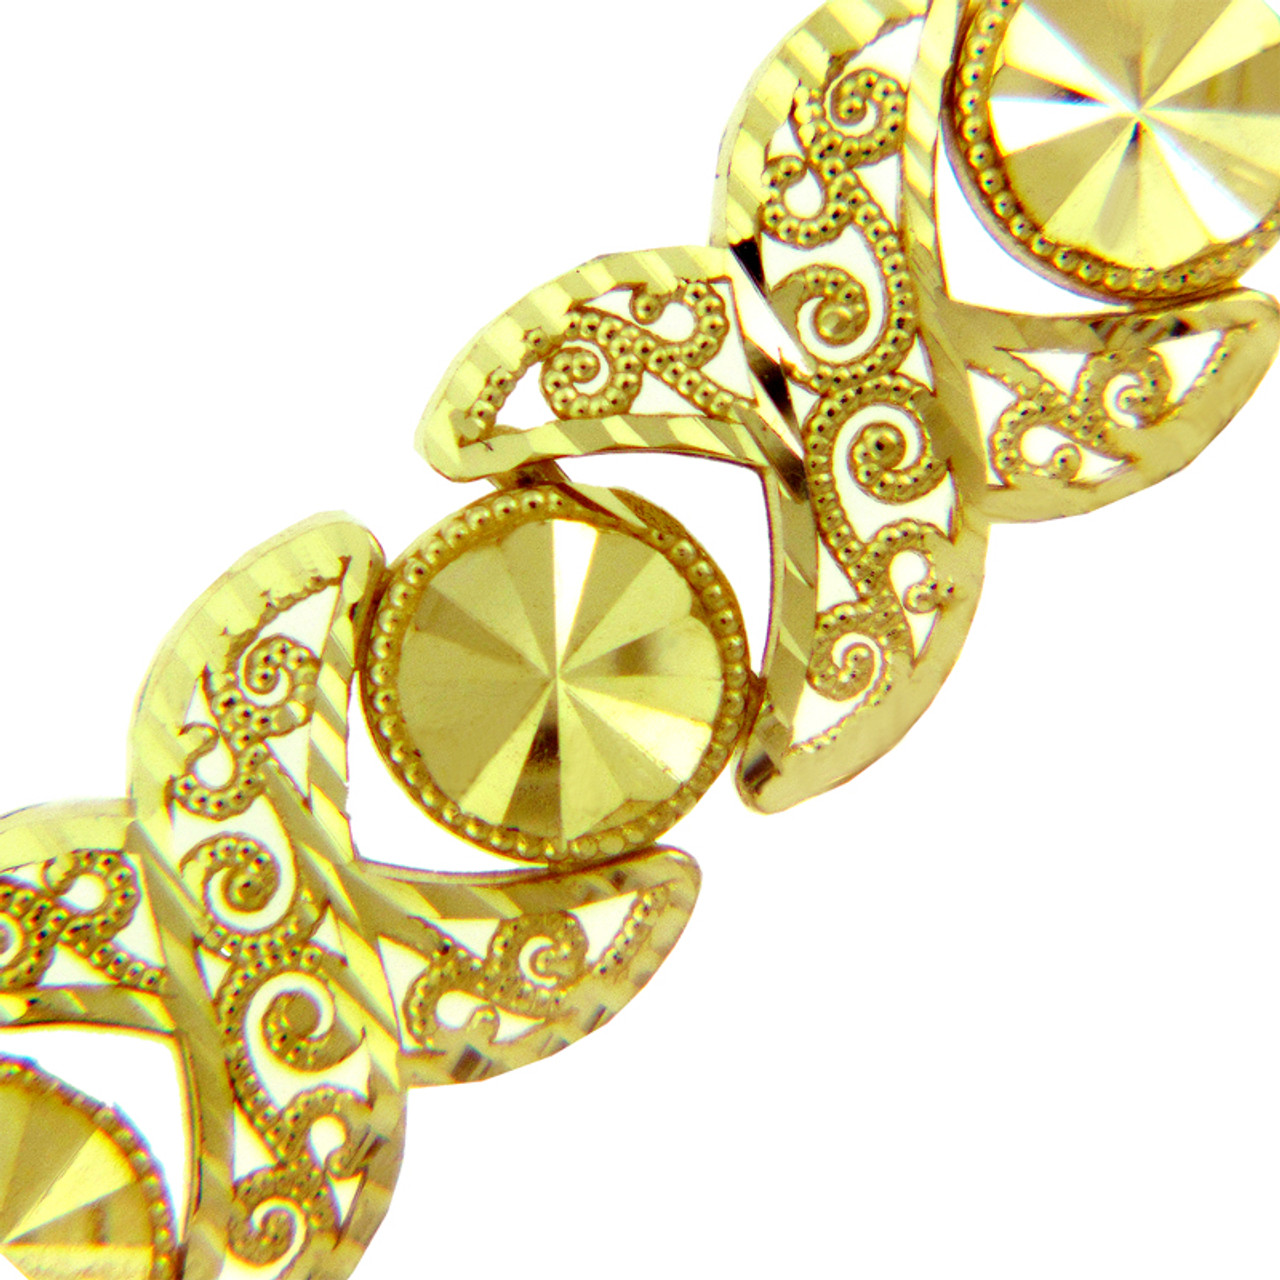 Yellow Gold Bracelet - The Nova Bracelet